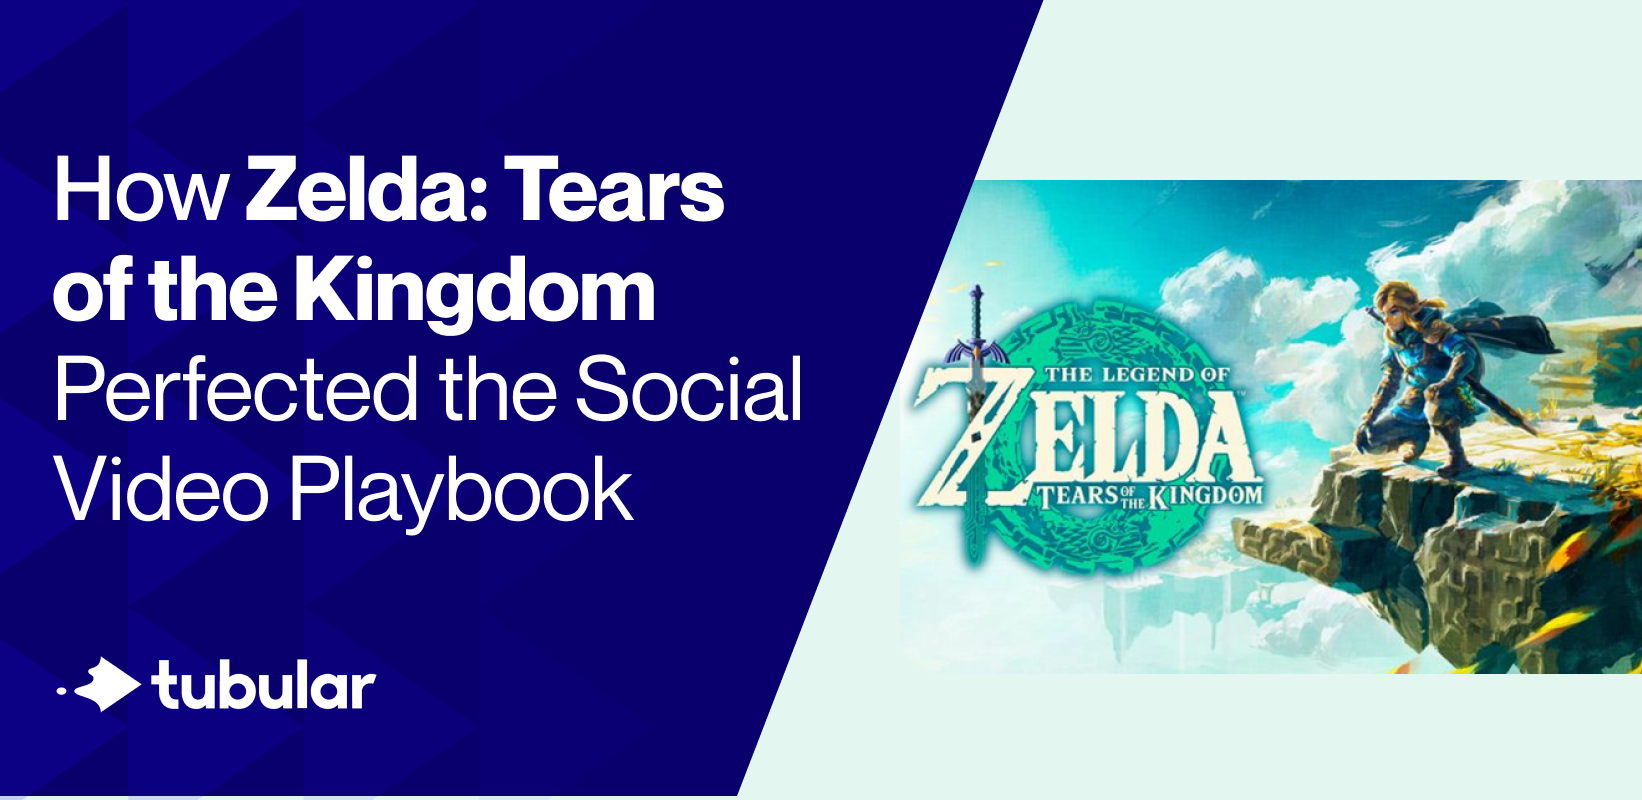 THE LEGEND OF ZELDA: TEARS OF THE KINGDOM Teases Great Evil